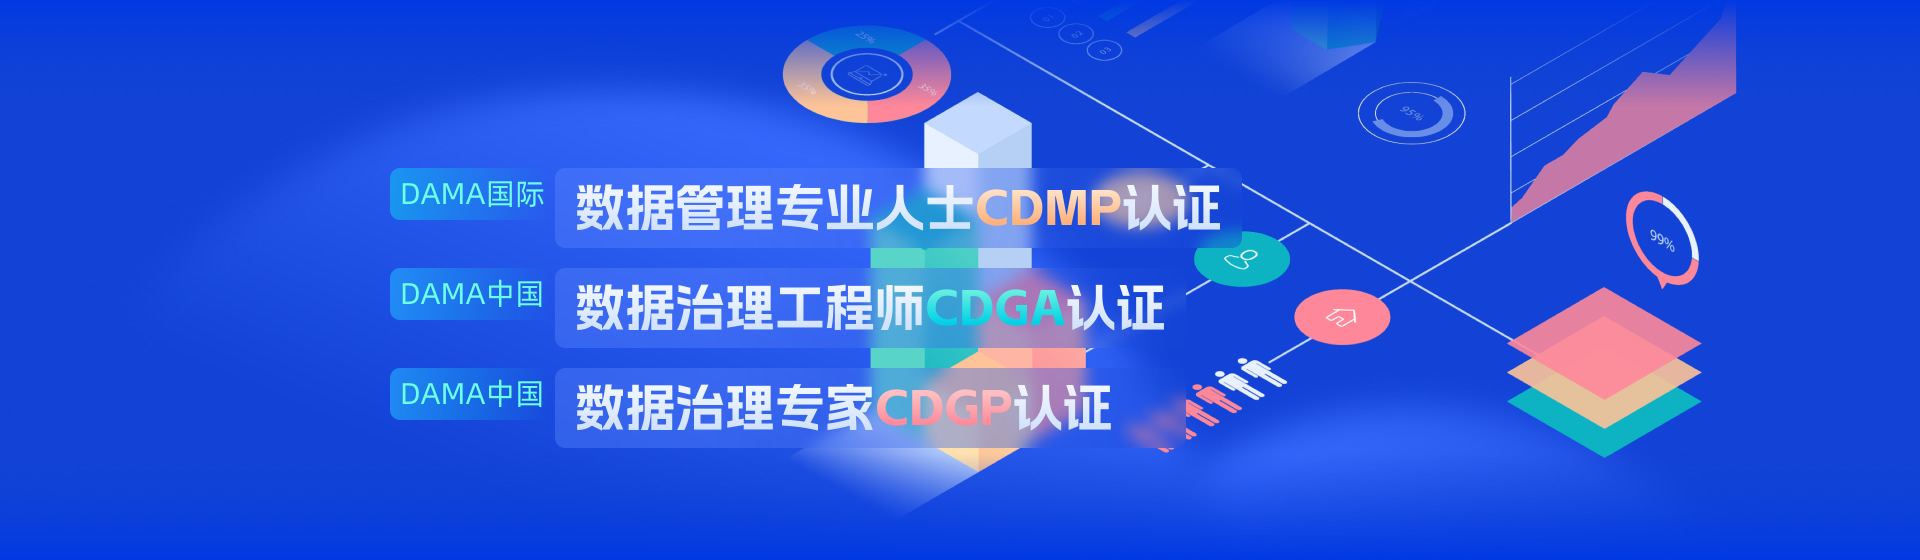 DAMA国际数据管理CDMP认证_DAMA中国数据治理CDGA认证/CDGP认证